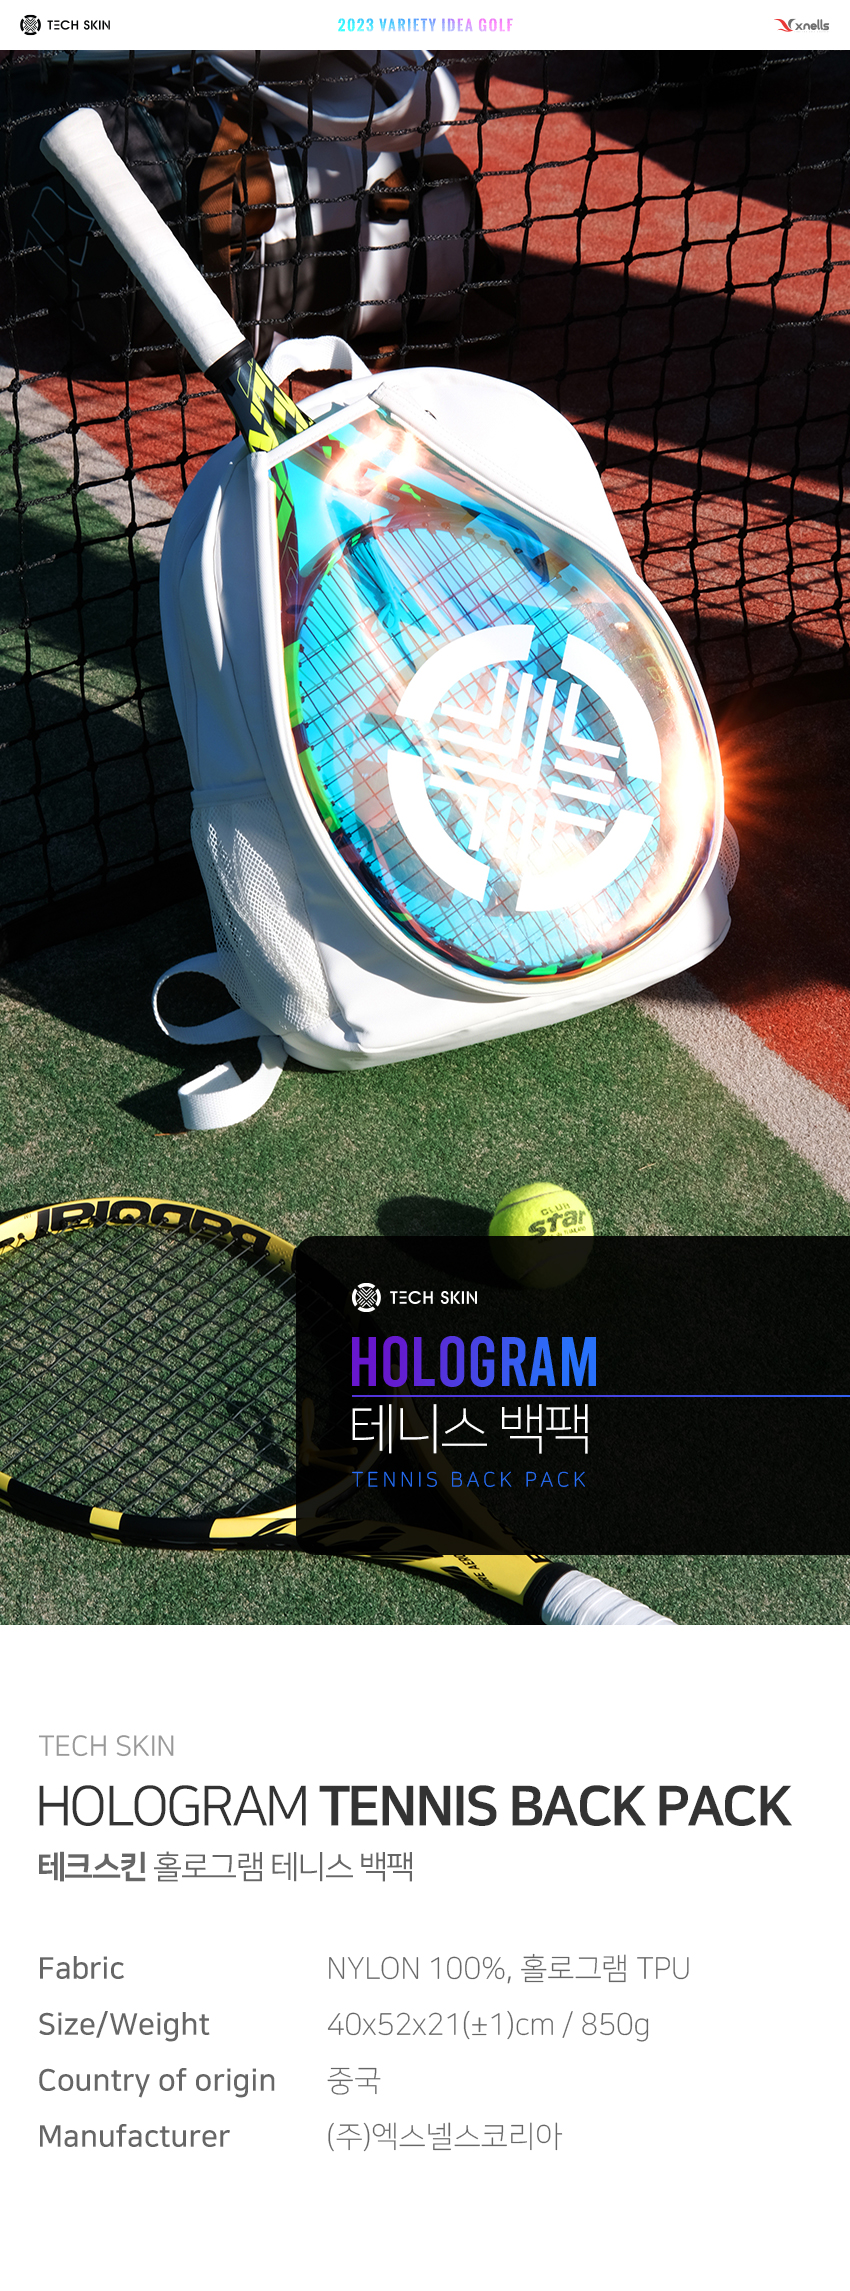 techskin_hologram_tennis_backpack_detail_01.jpg